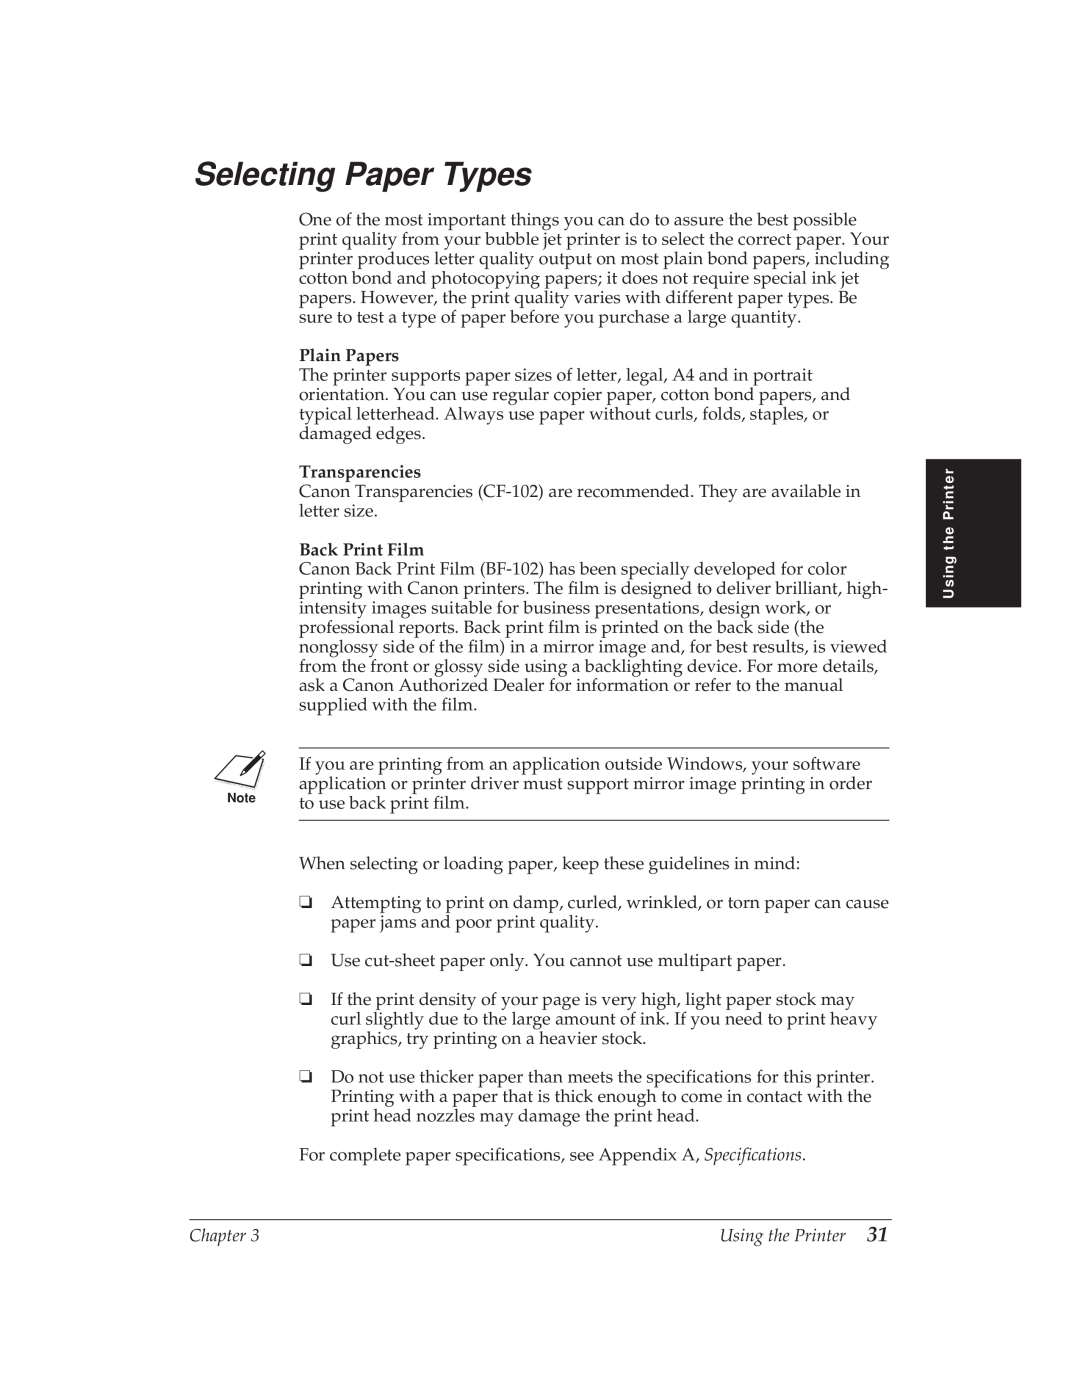 Canon BJ-30 manual Selecting Paper Types, Plain Papers, Transparencies, Back Print Film 